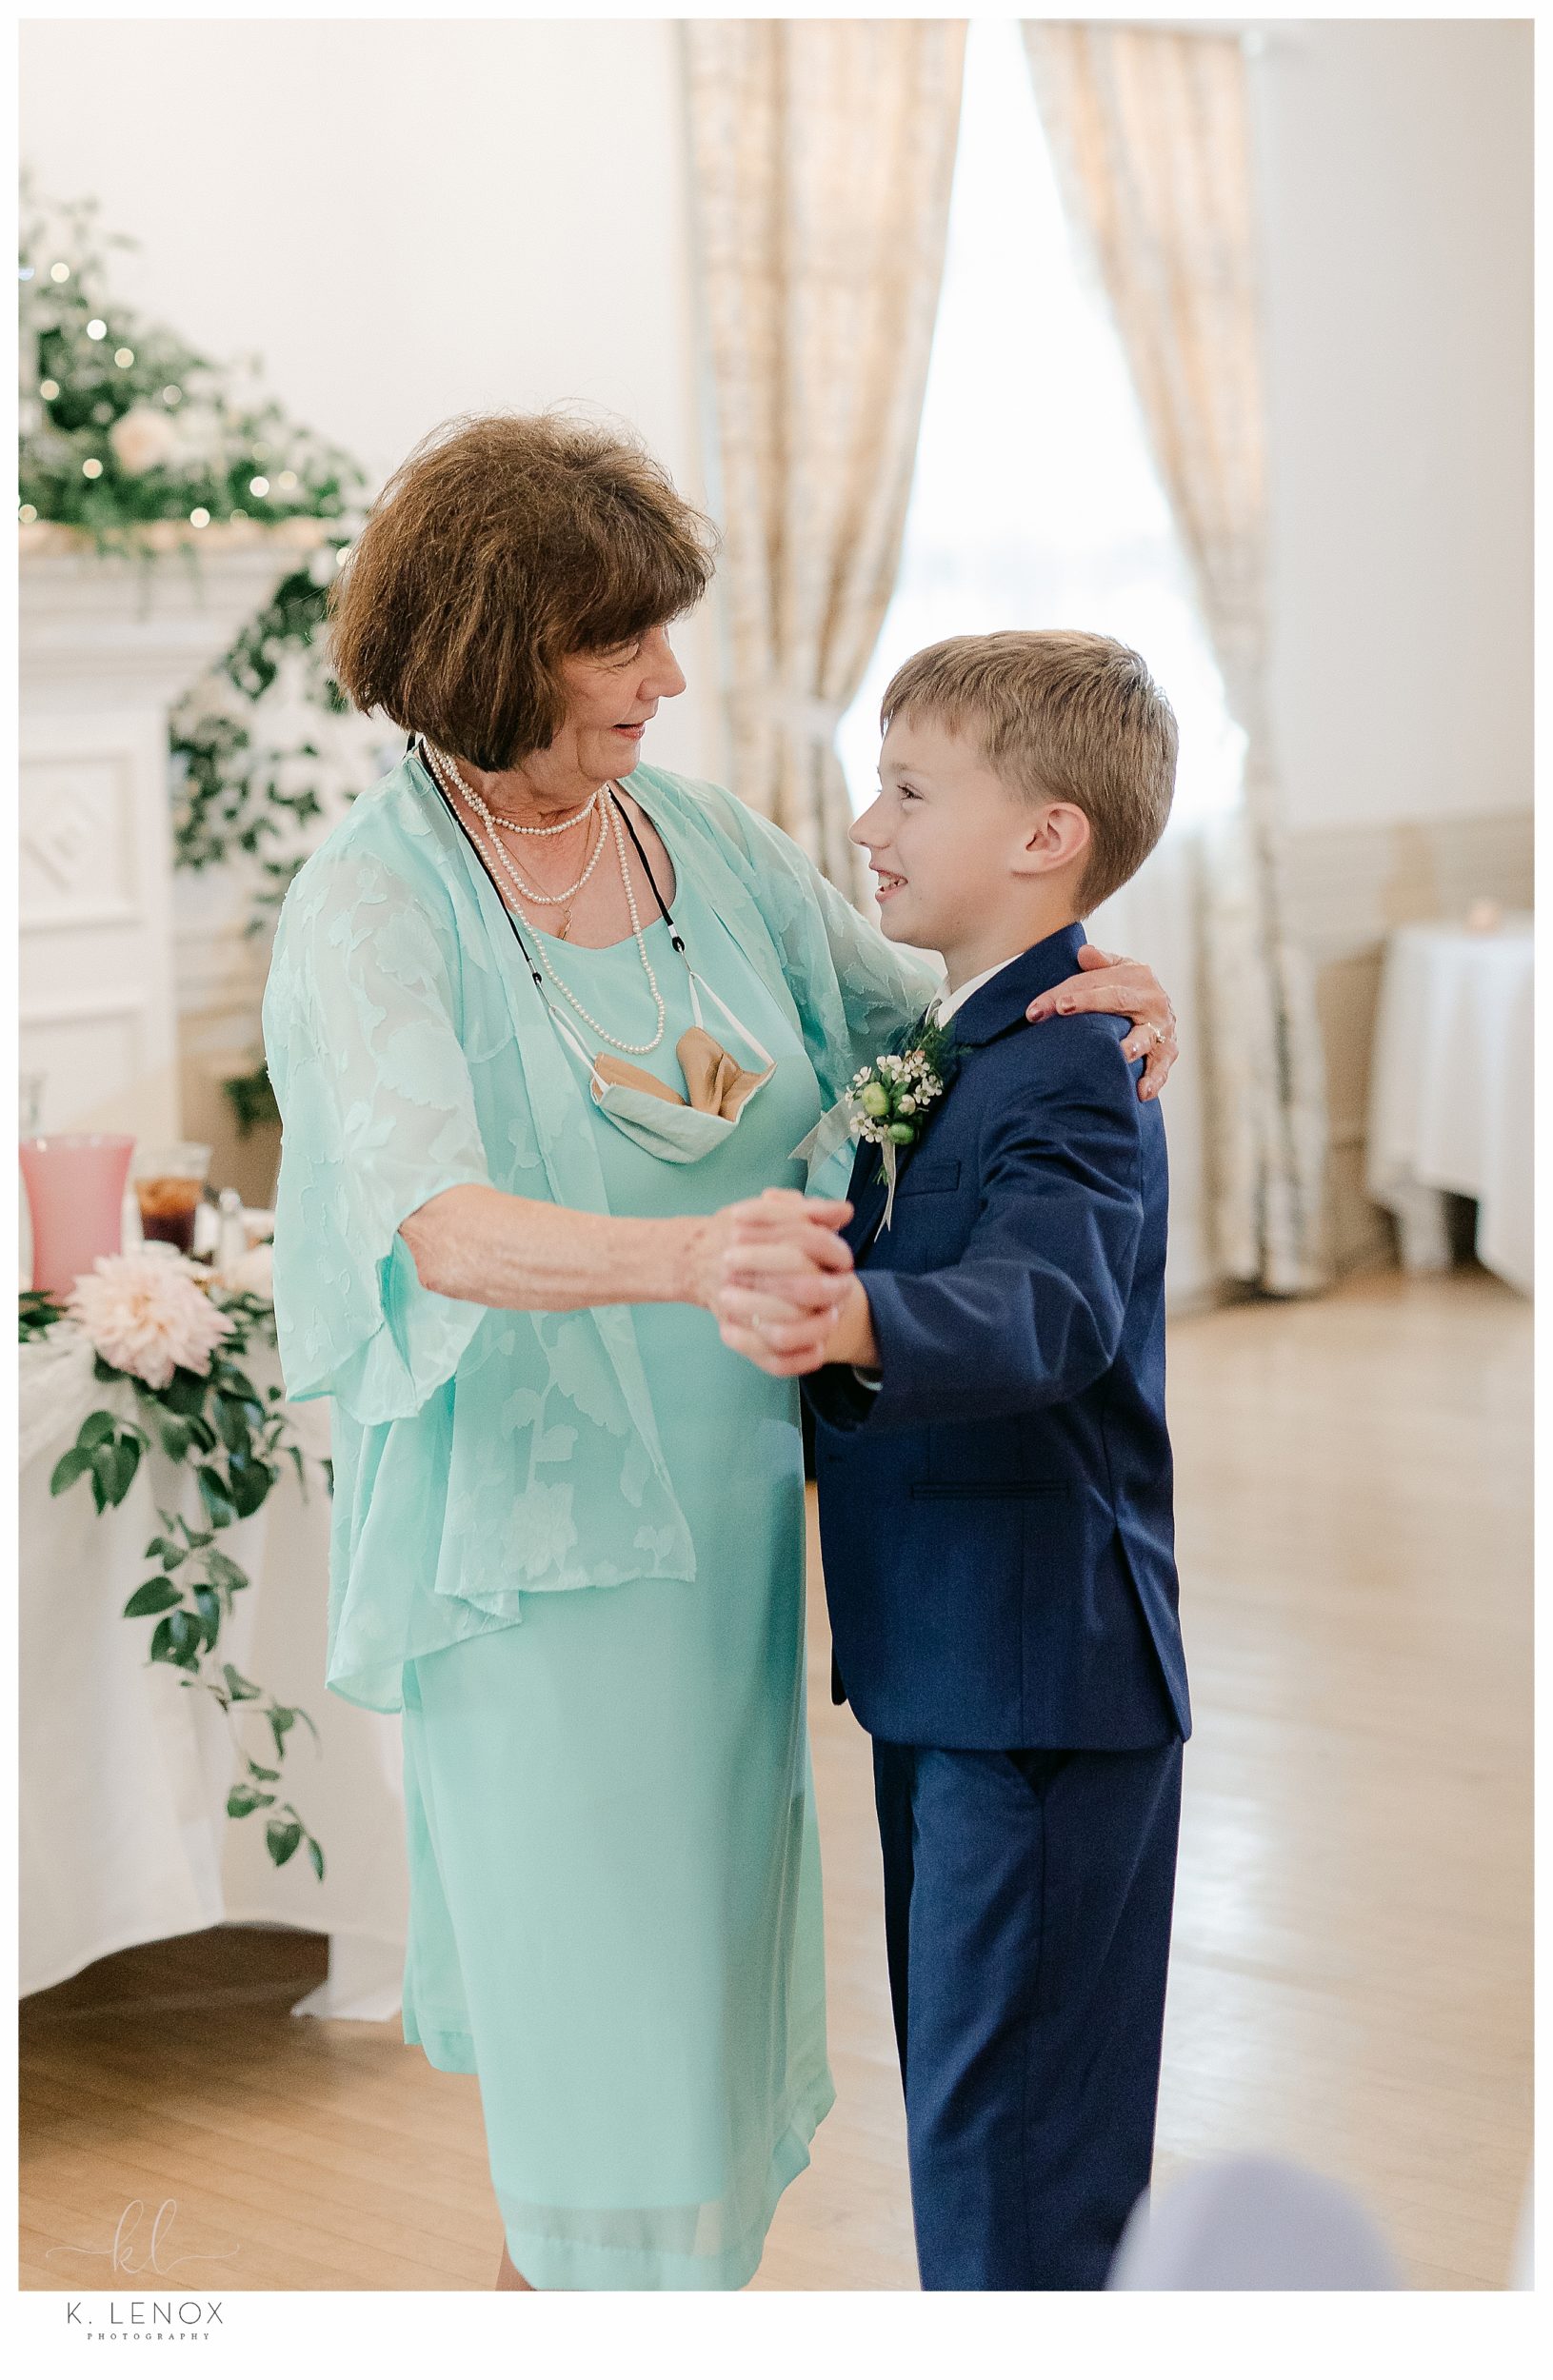 Wedding at the Keene Country Club- Grandma and grandson dancing